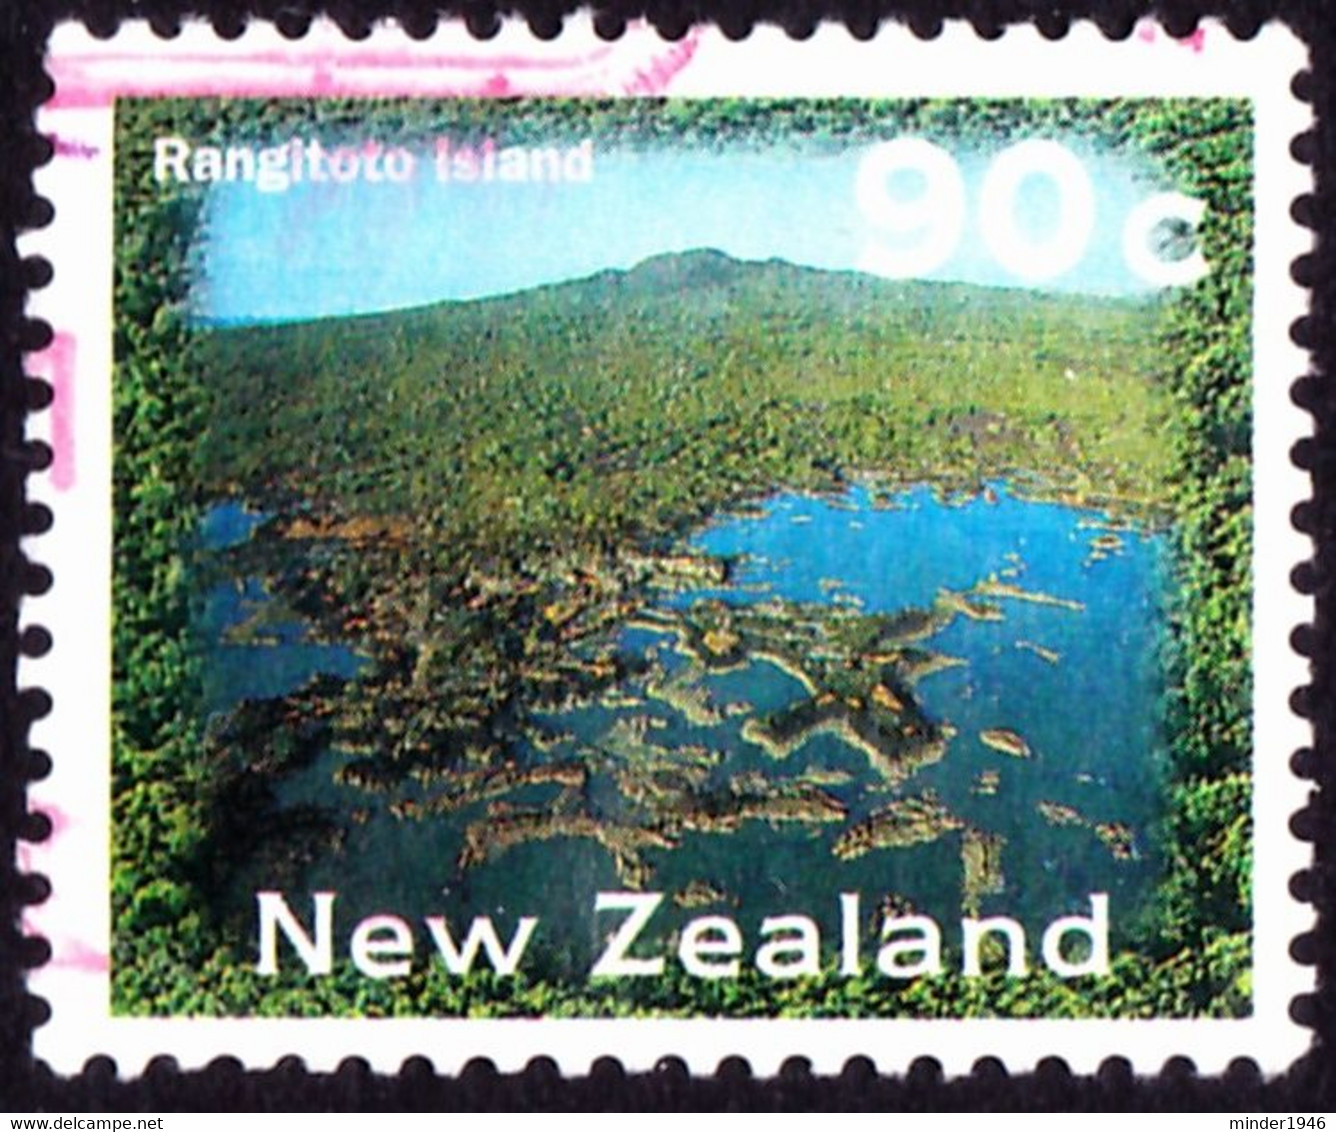 NEW ZEALAND 2000 QEII 90c Multicoloured, Scenery-Rangitoto Island SG1934 FU - Gebruikt